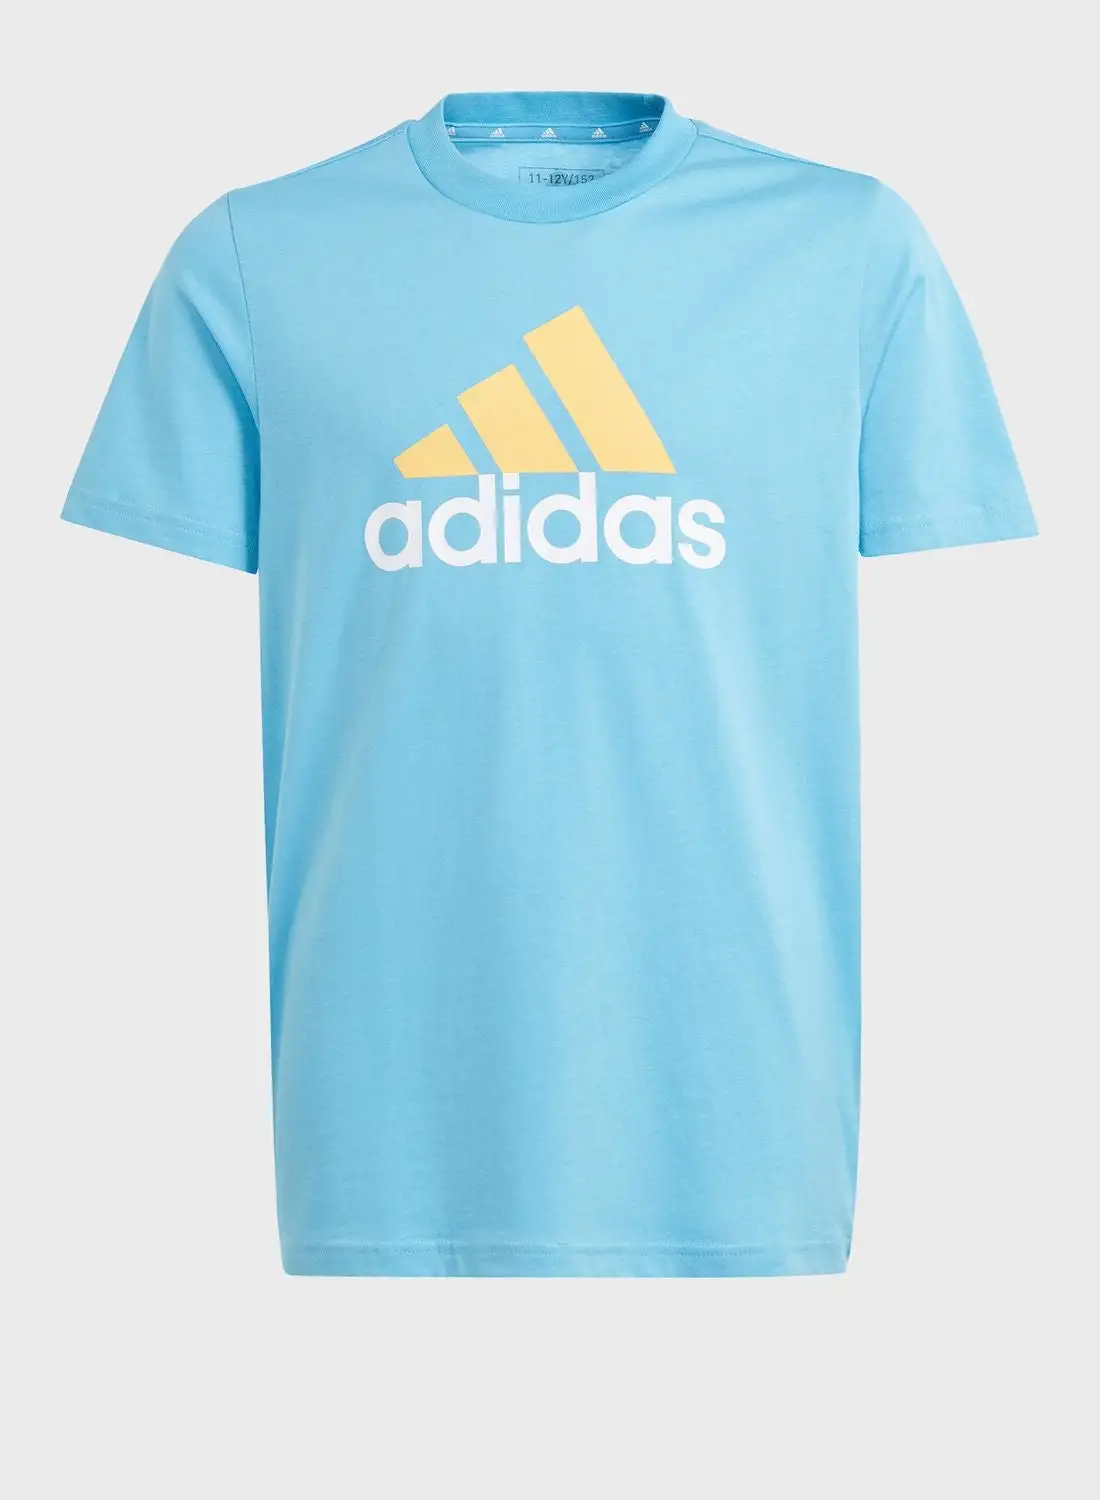 Adidas Unisex Big Logo 2 T-Shirt